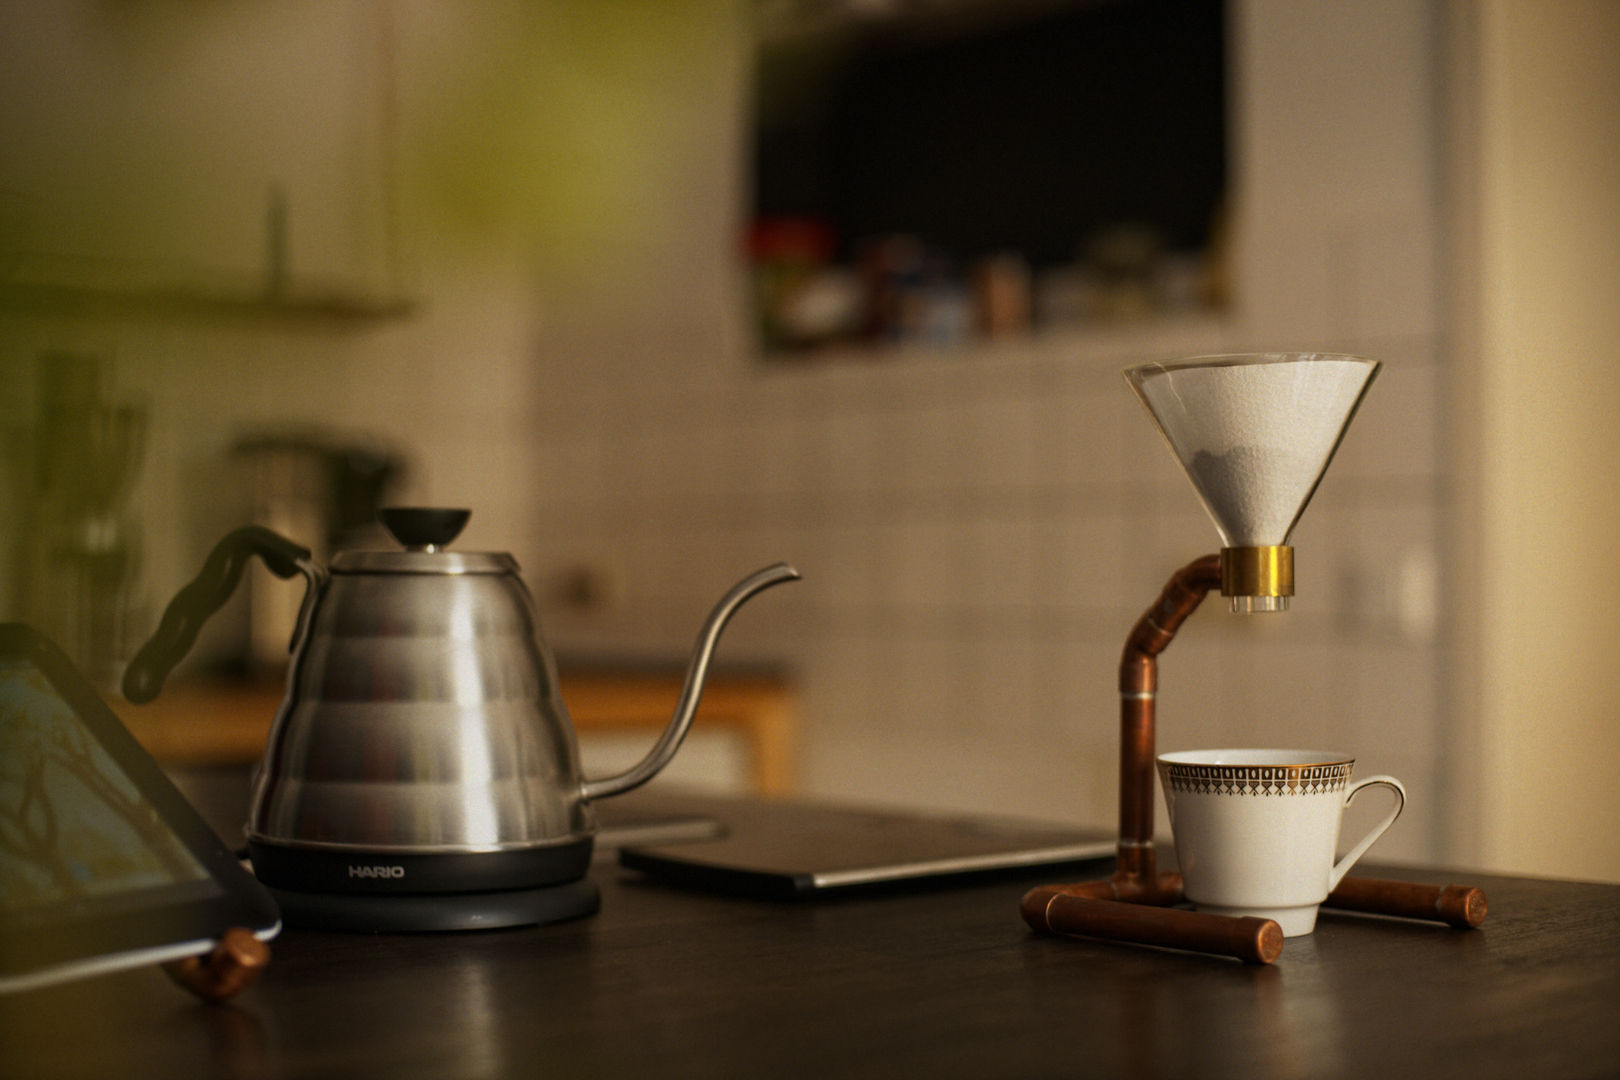 COPPER COFFEE - Dripper - Pour Over Coffee Stand, Drip Coffee Stand, COPPER COFFEE COPPER COFFEE Endüstriyel Mutfak Bakır/Bronz/Pirinç Mutfak Malzemeleri